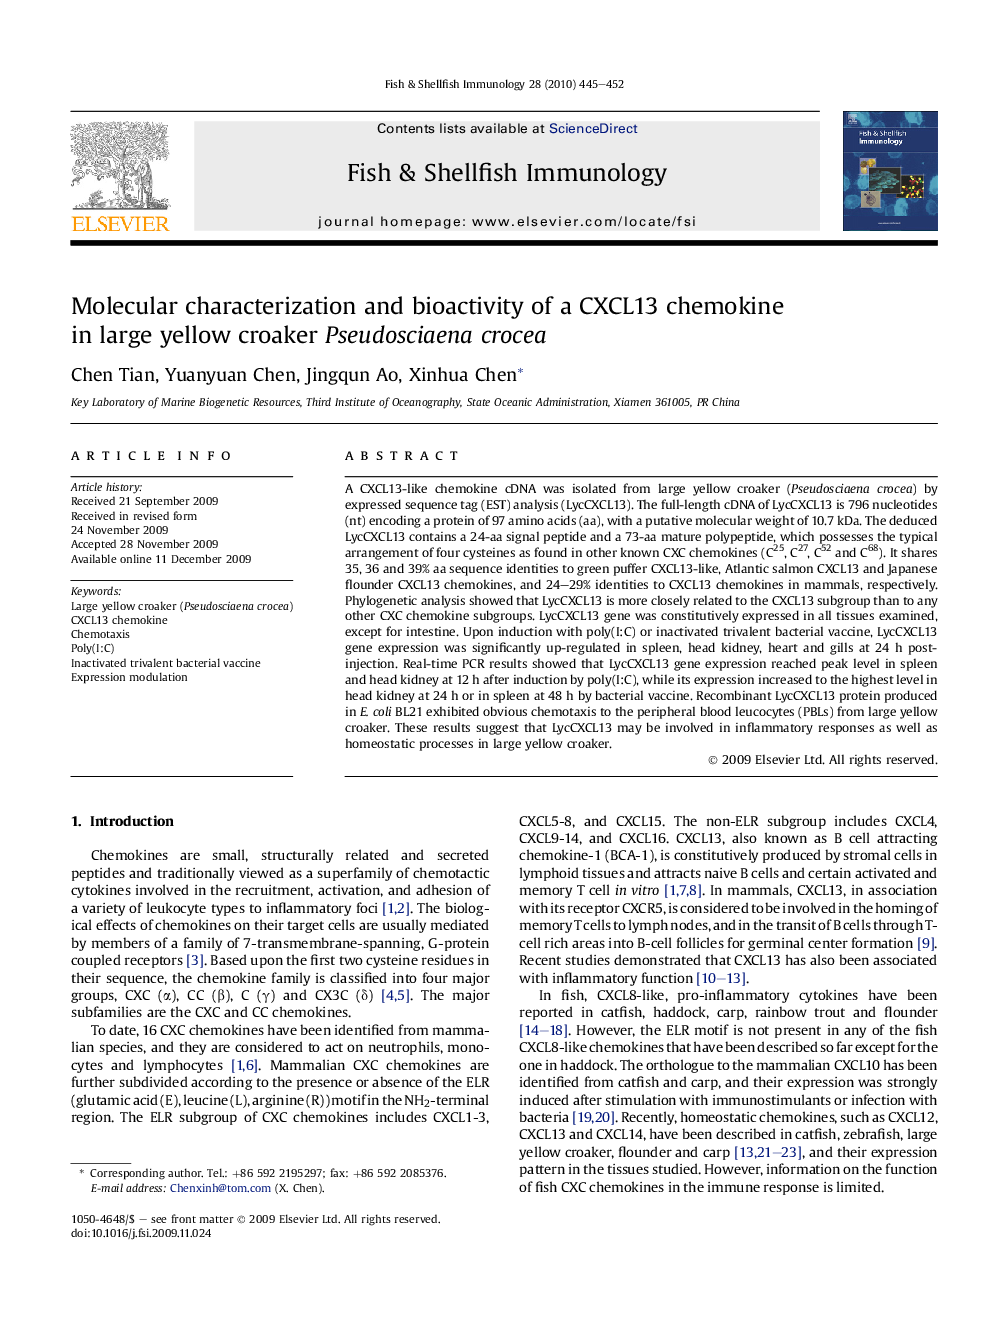 Molecular characterization and bioactivity of a CXCL13 chemokine in large yellow croaker Pseudosciaena crocea